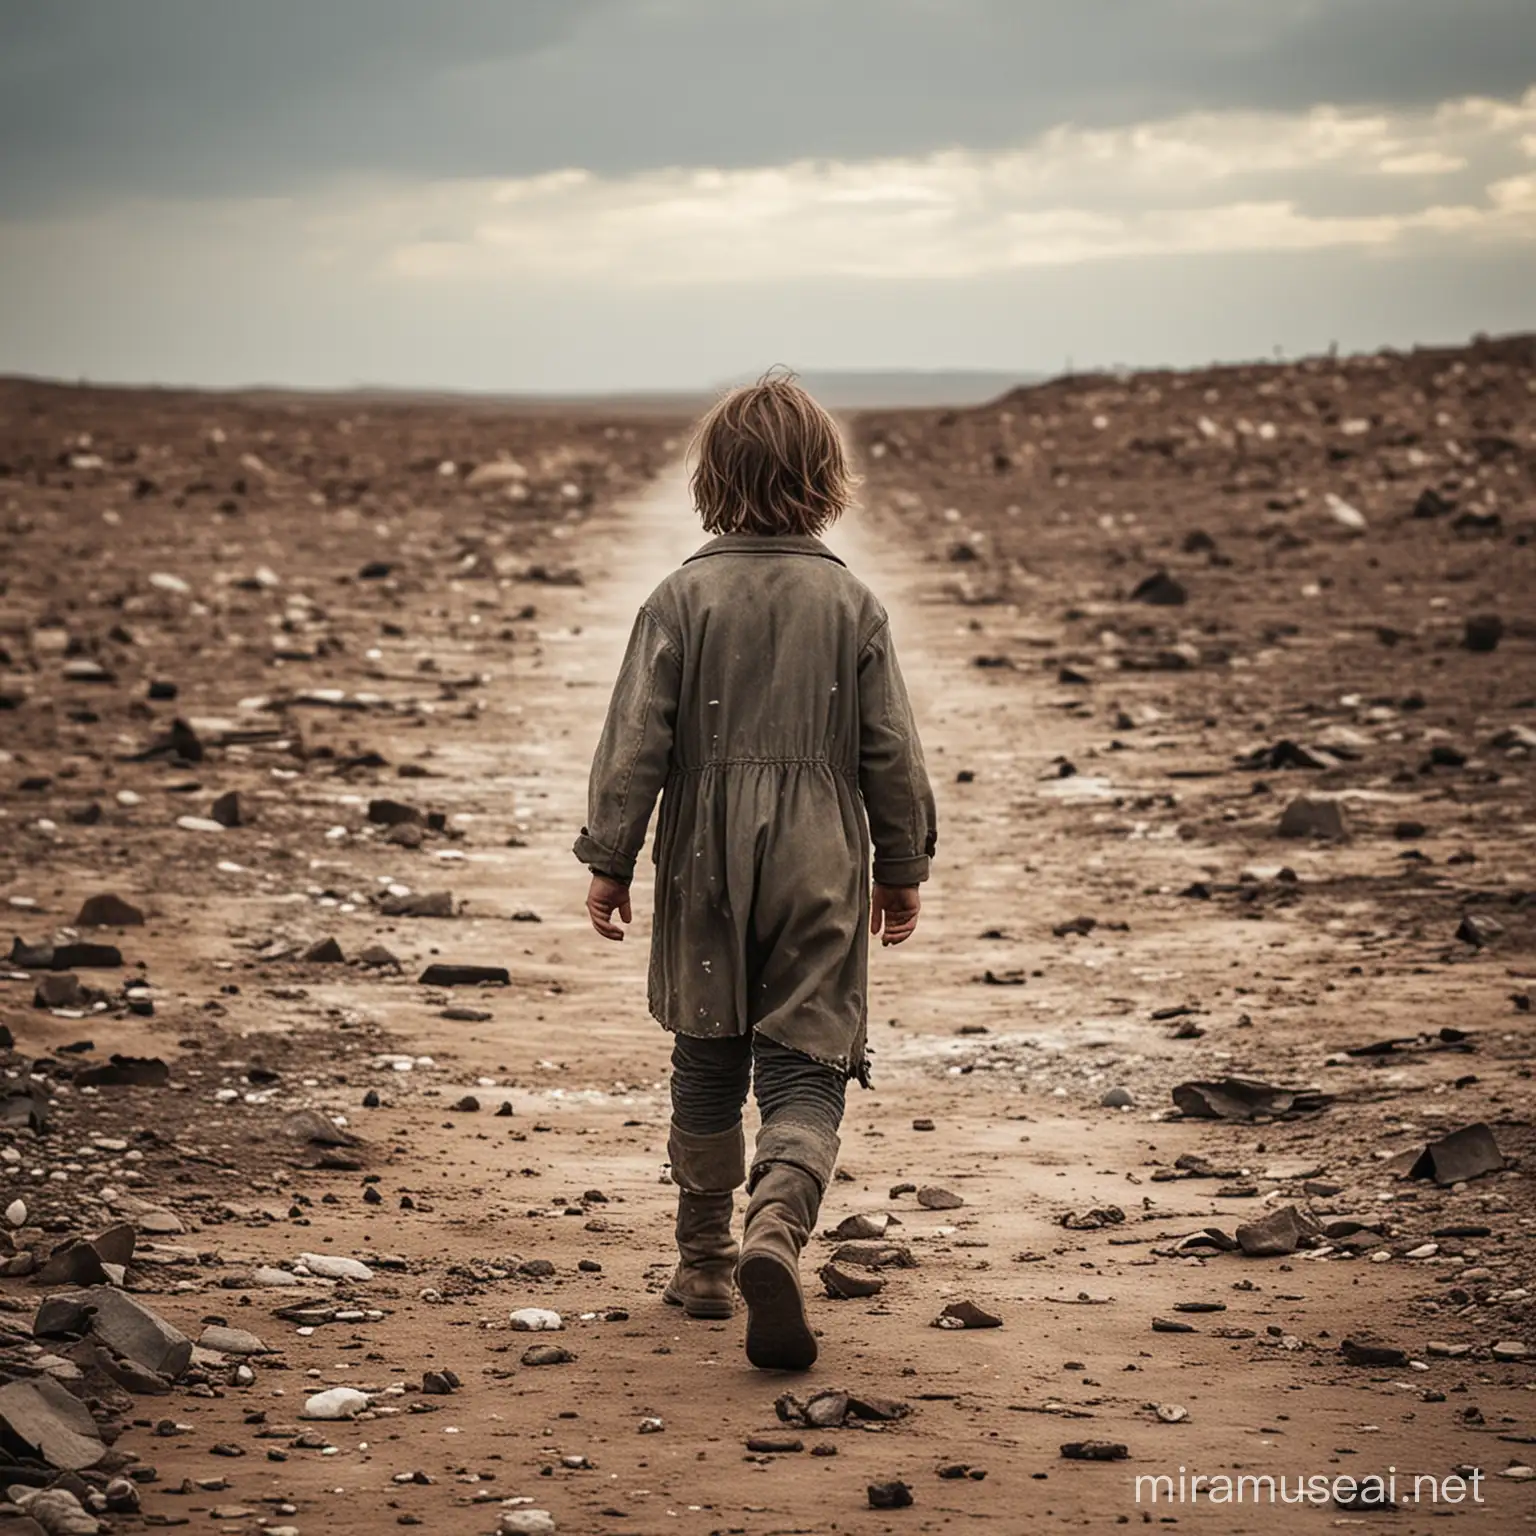 Lonely Child Walking in Barren Wasteland